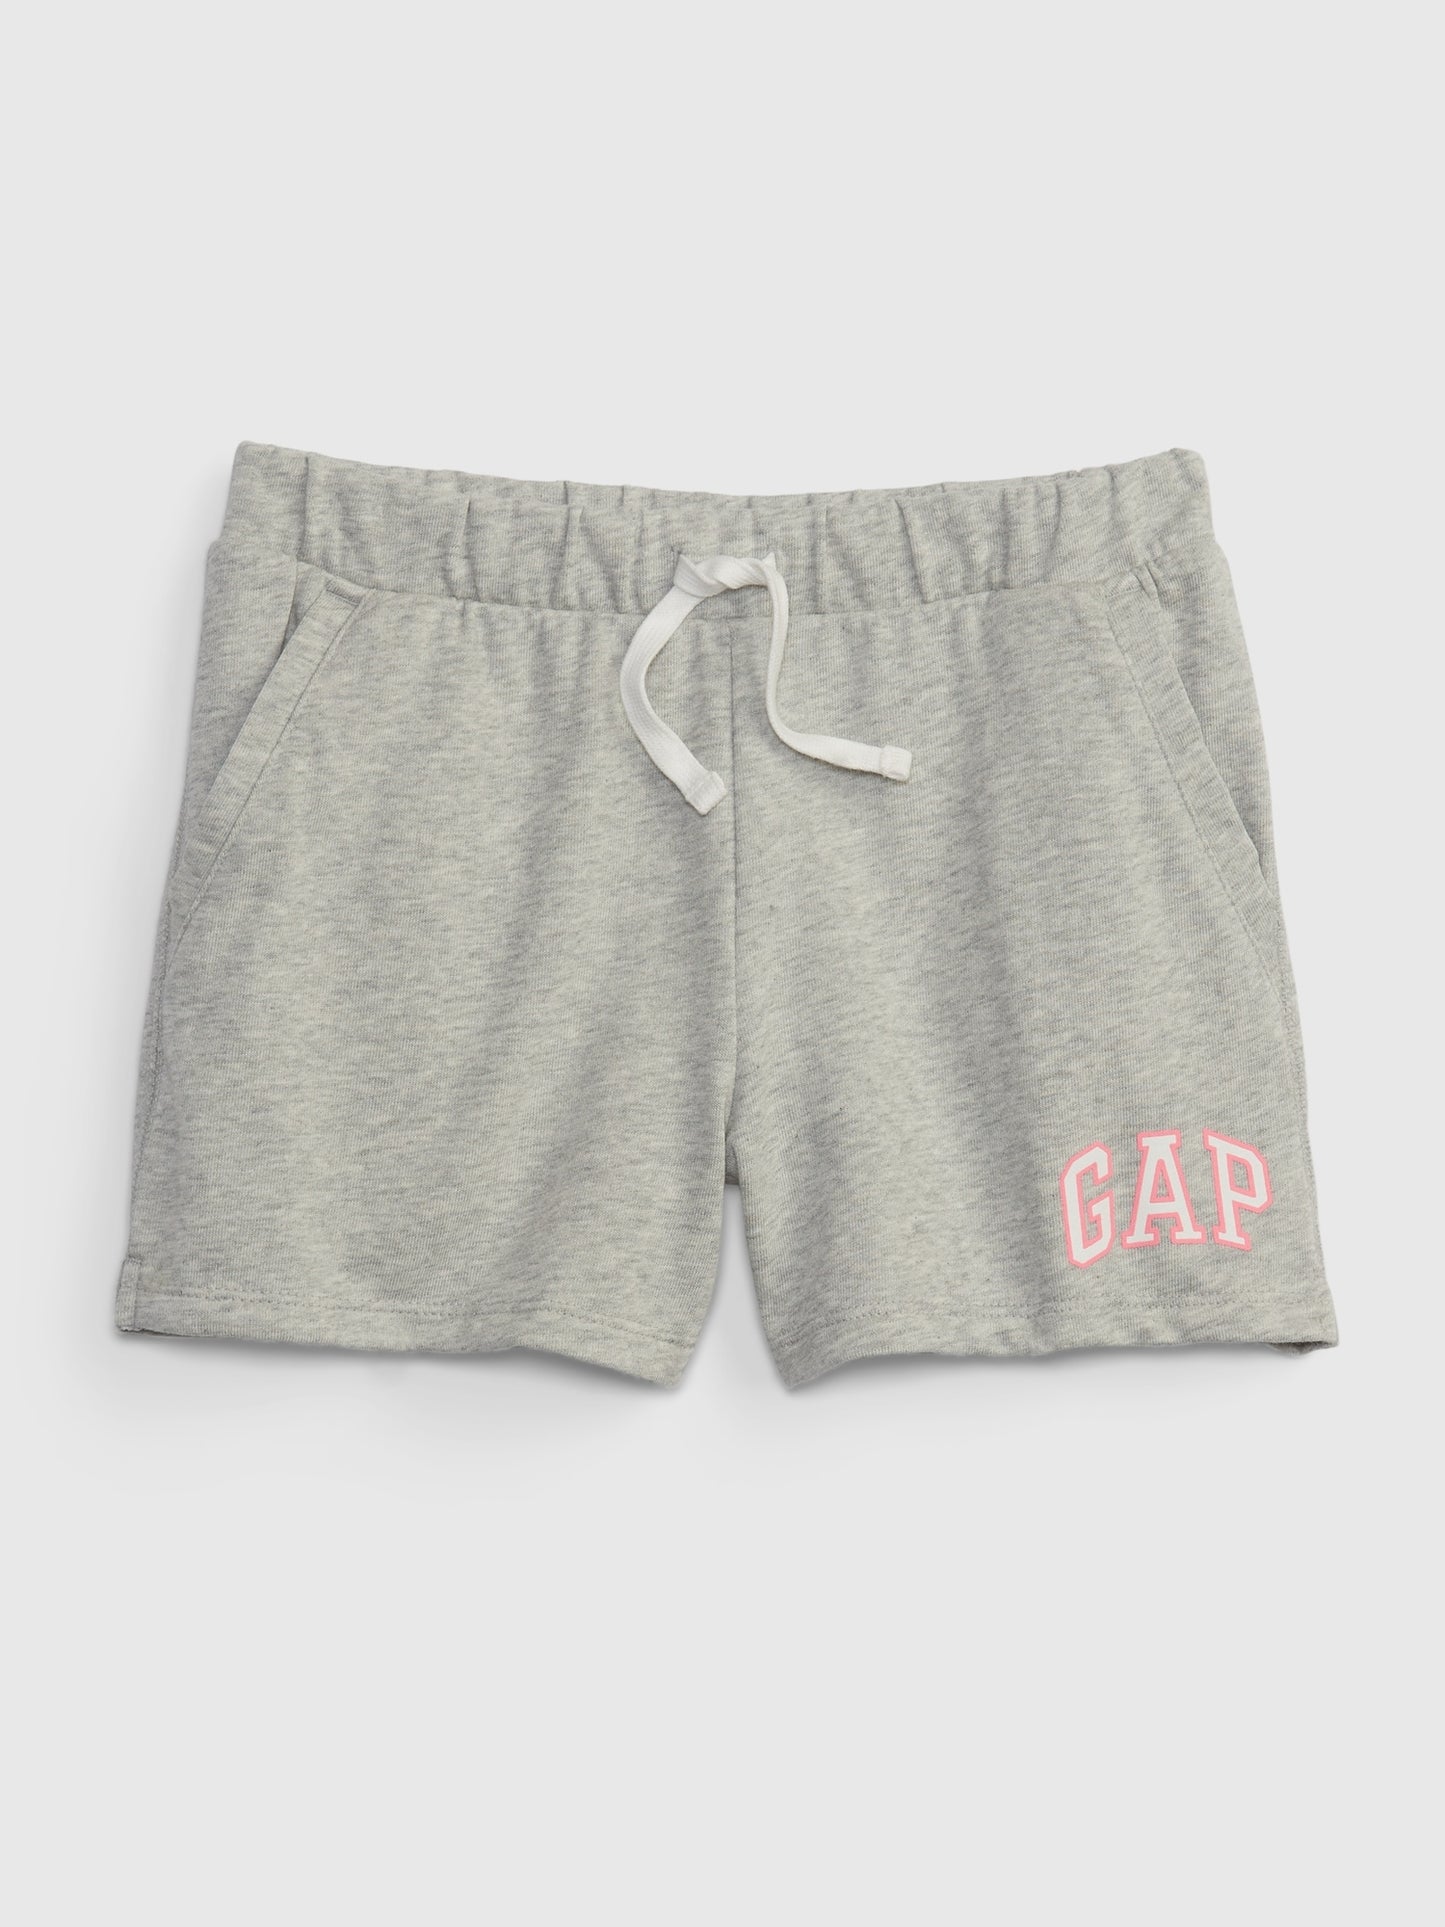 Gap Kids Pull-On Logo Shorts - Light Heather Grey